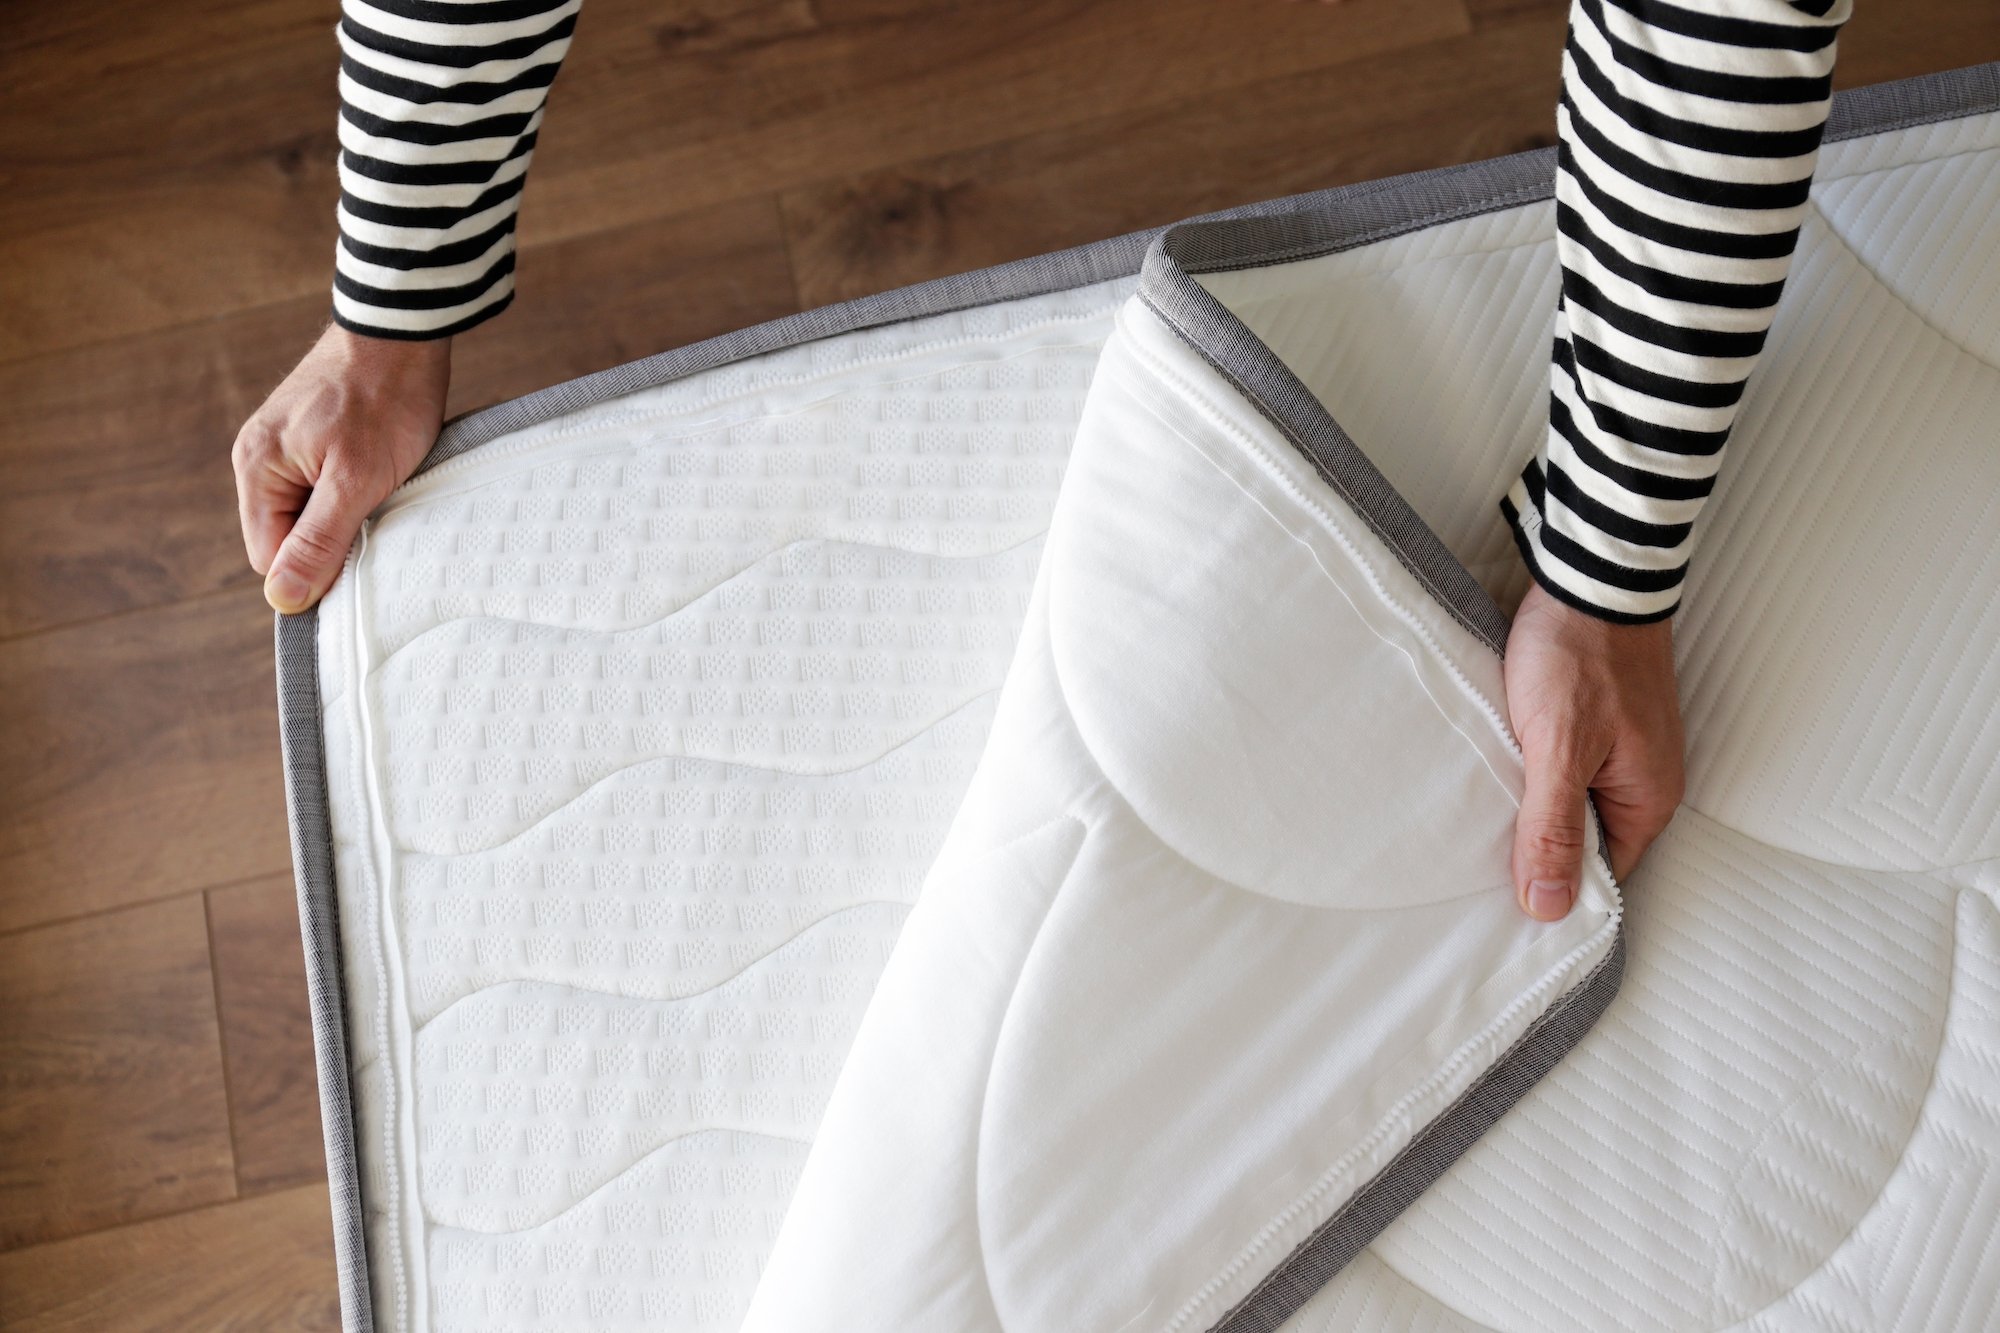 crib mattress pad vs mattress protector